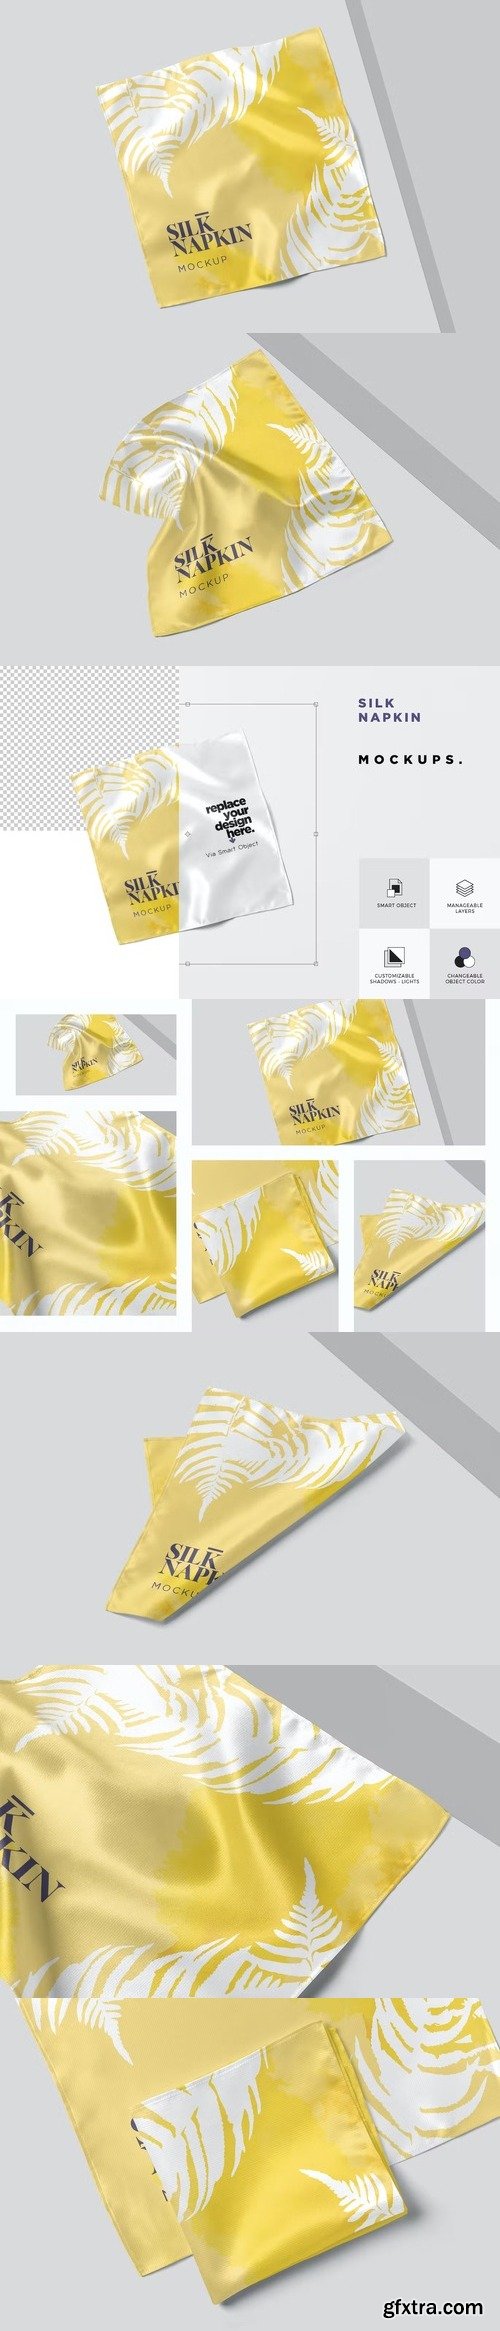 CreativeMarket - Silk napkin mockups 7498828